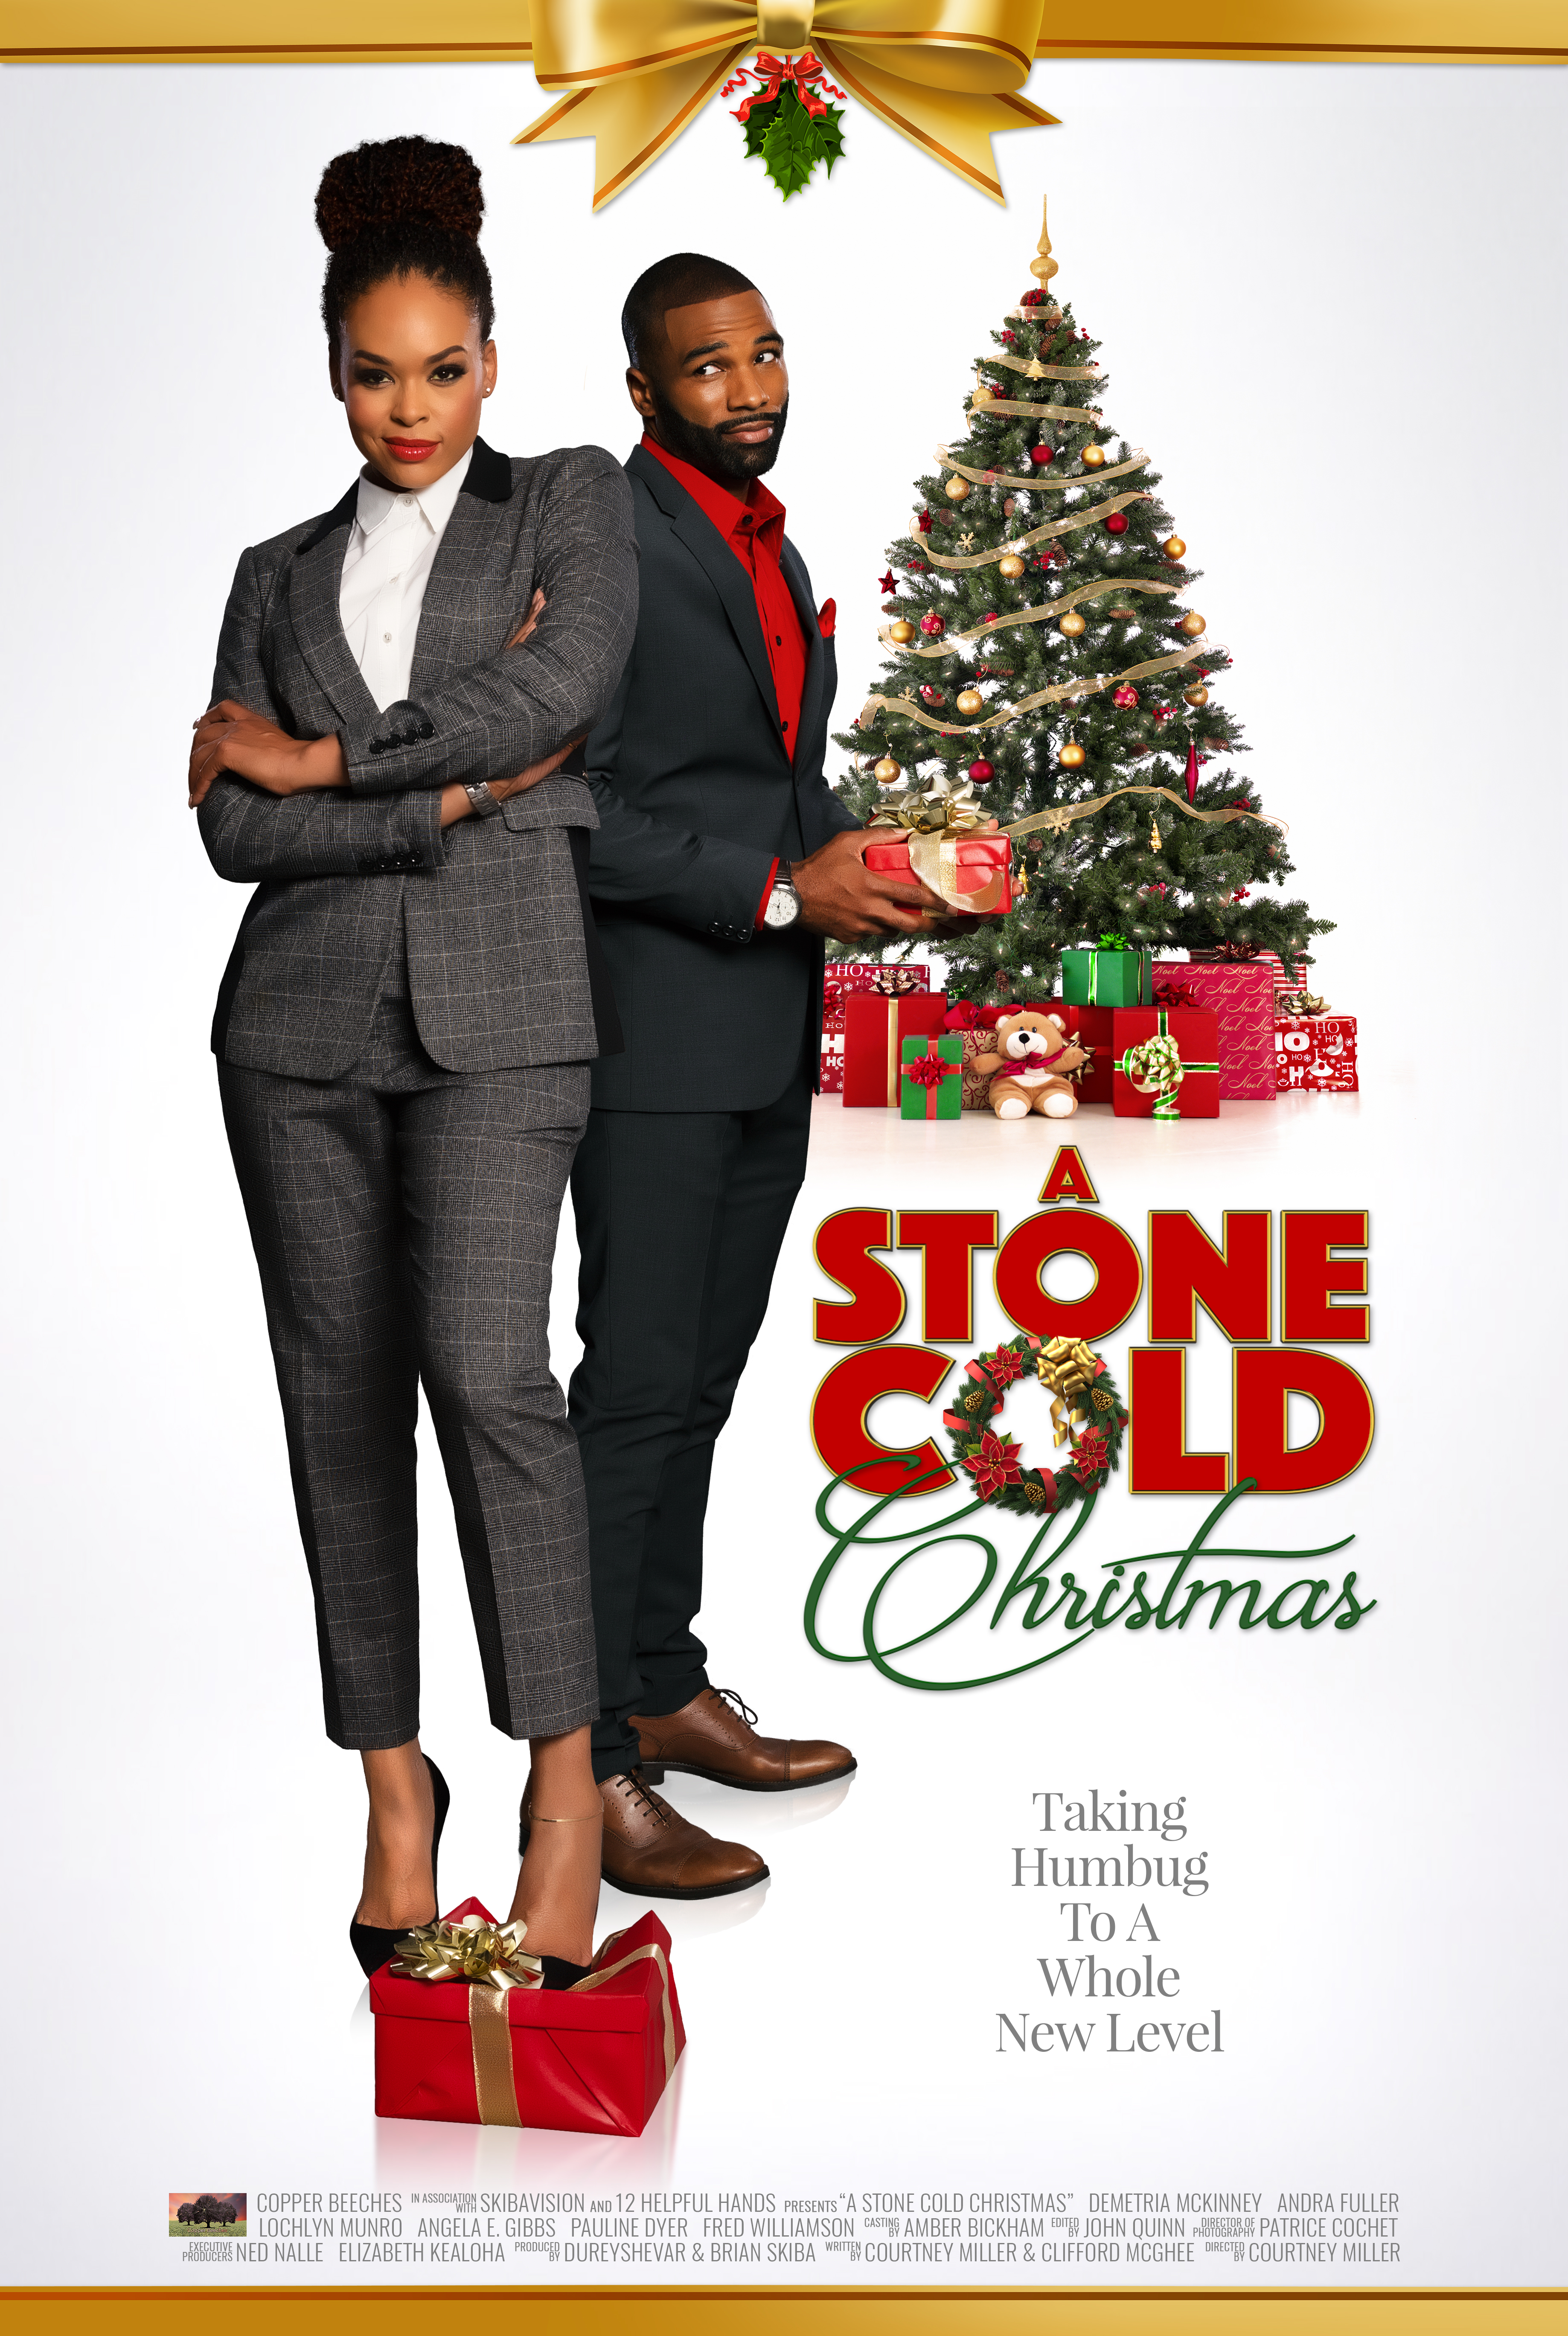 Nonton film A Stone Cold Christmas layarkaca21 indoxx1 ganool online streaming terbaru